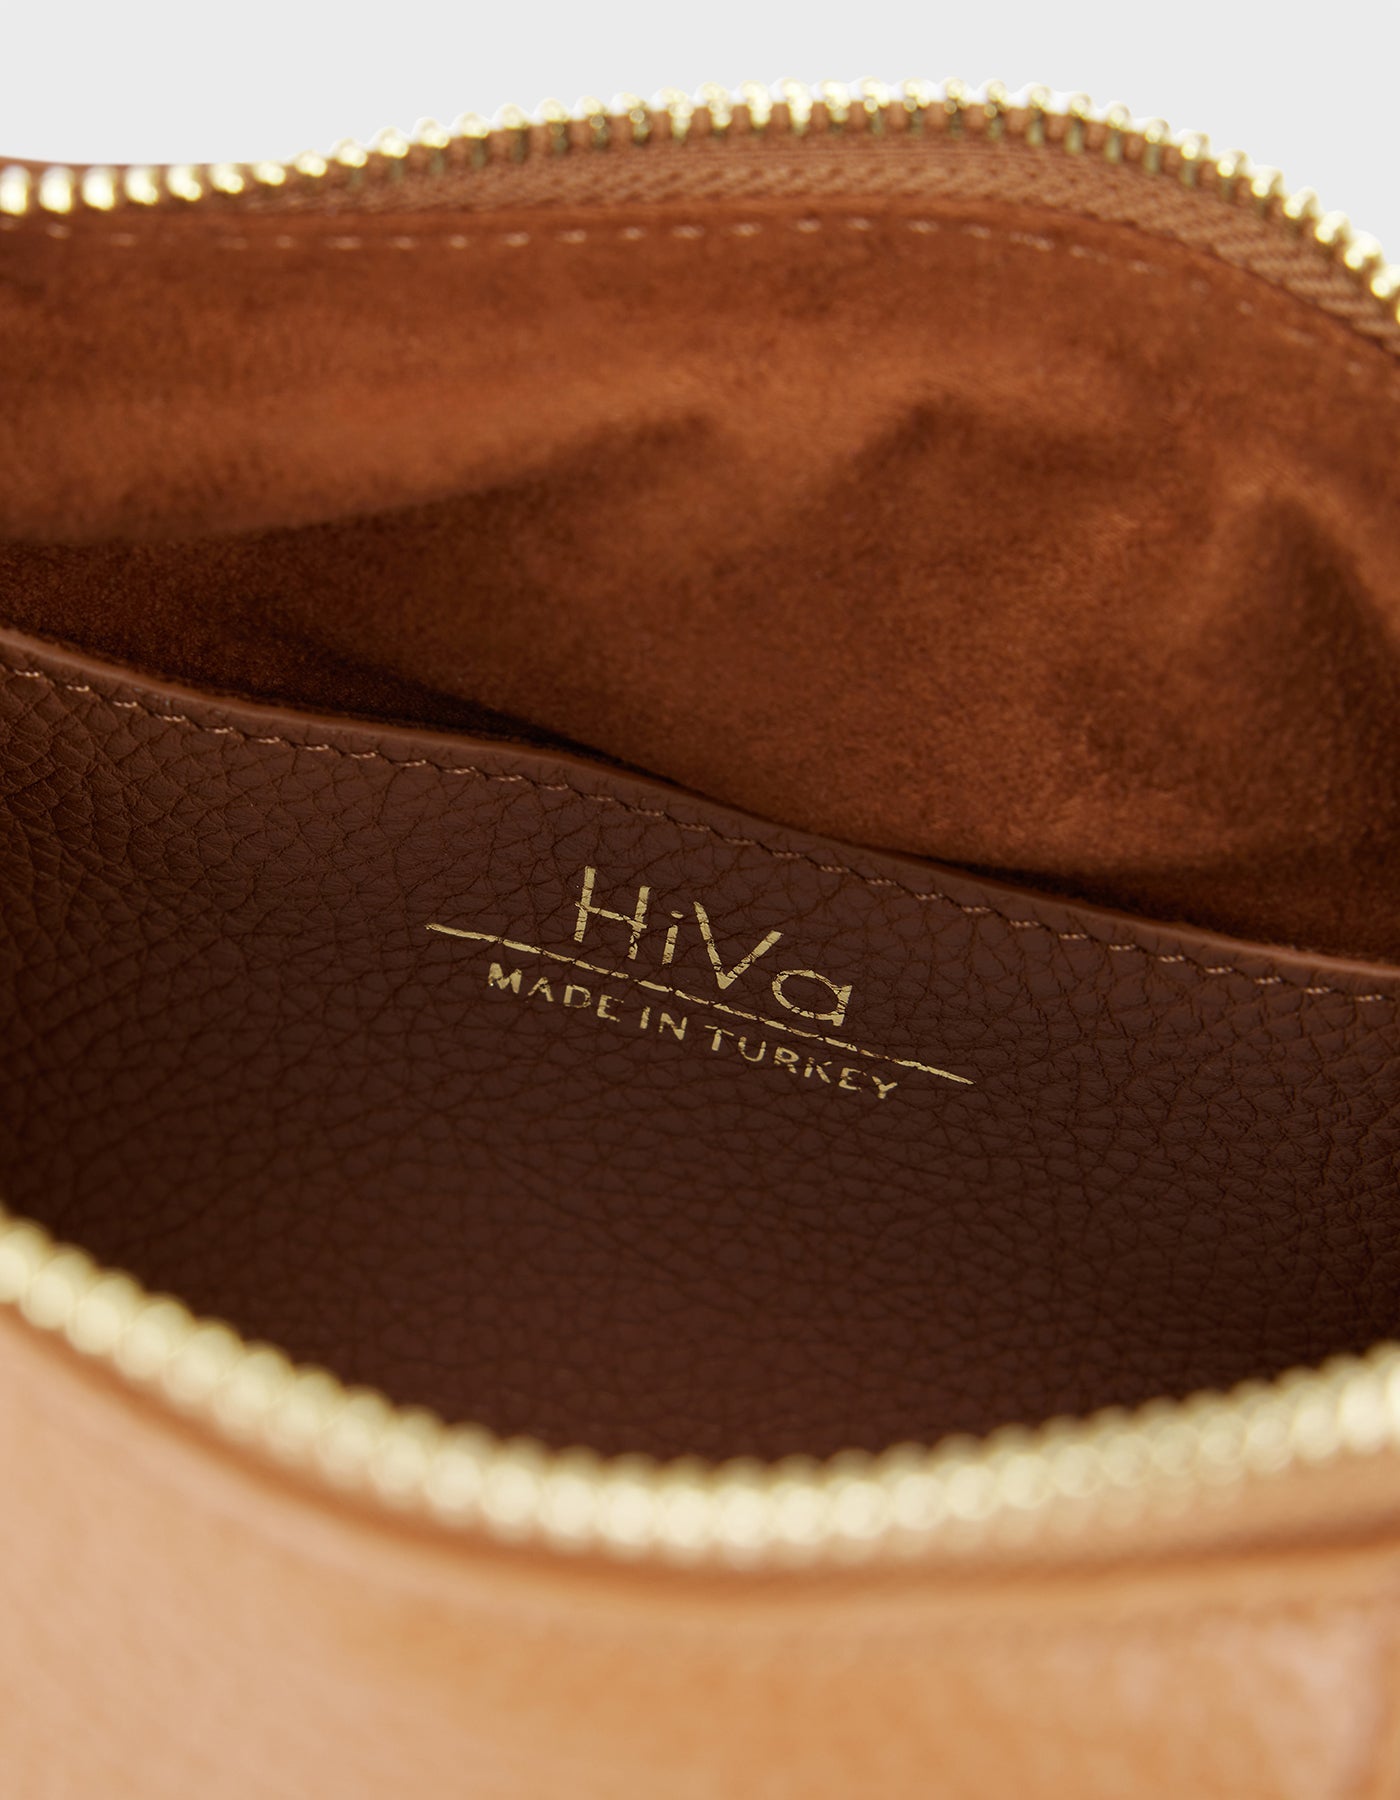 HiVa Atelier | Midi Croissant Bag Wood | Her Tarza Uygun Deri Aksesuarlar